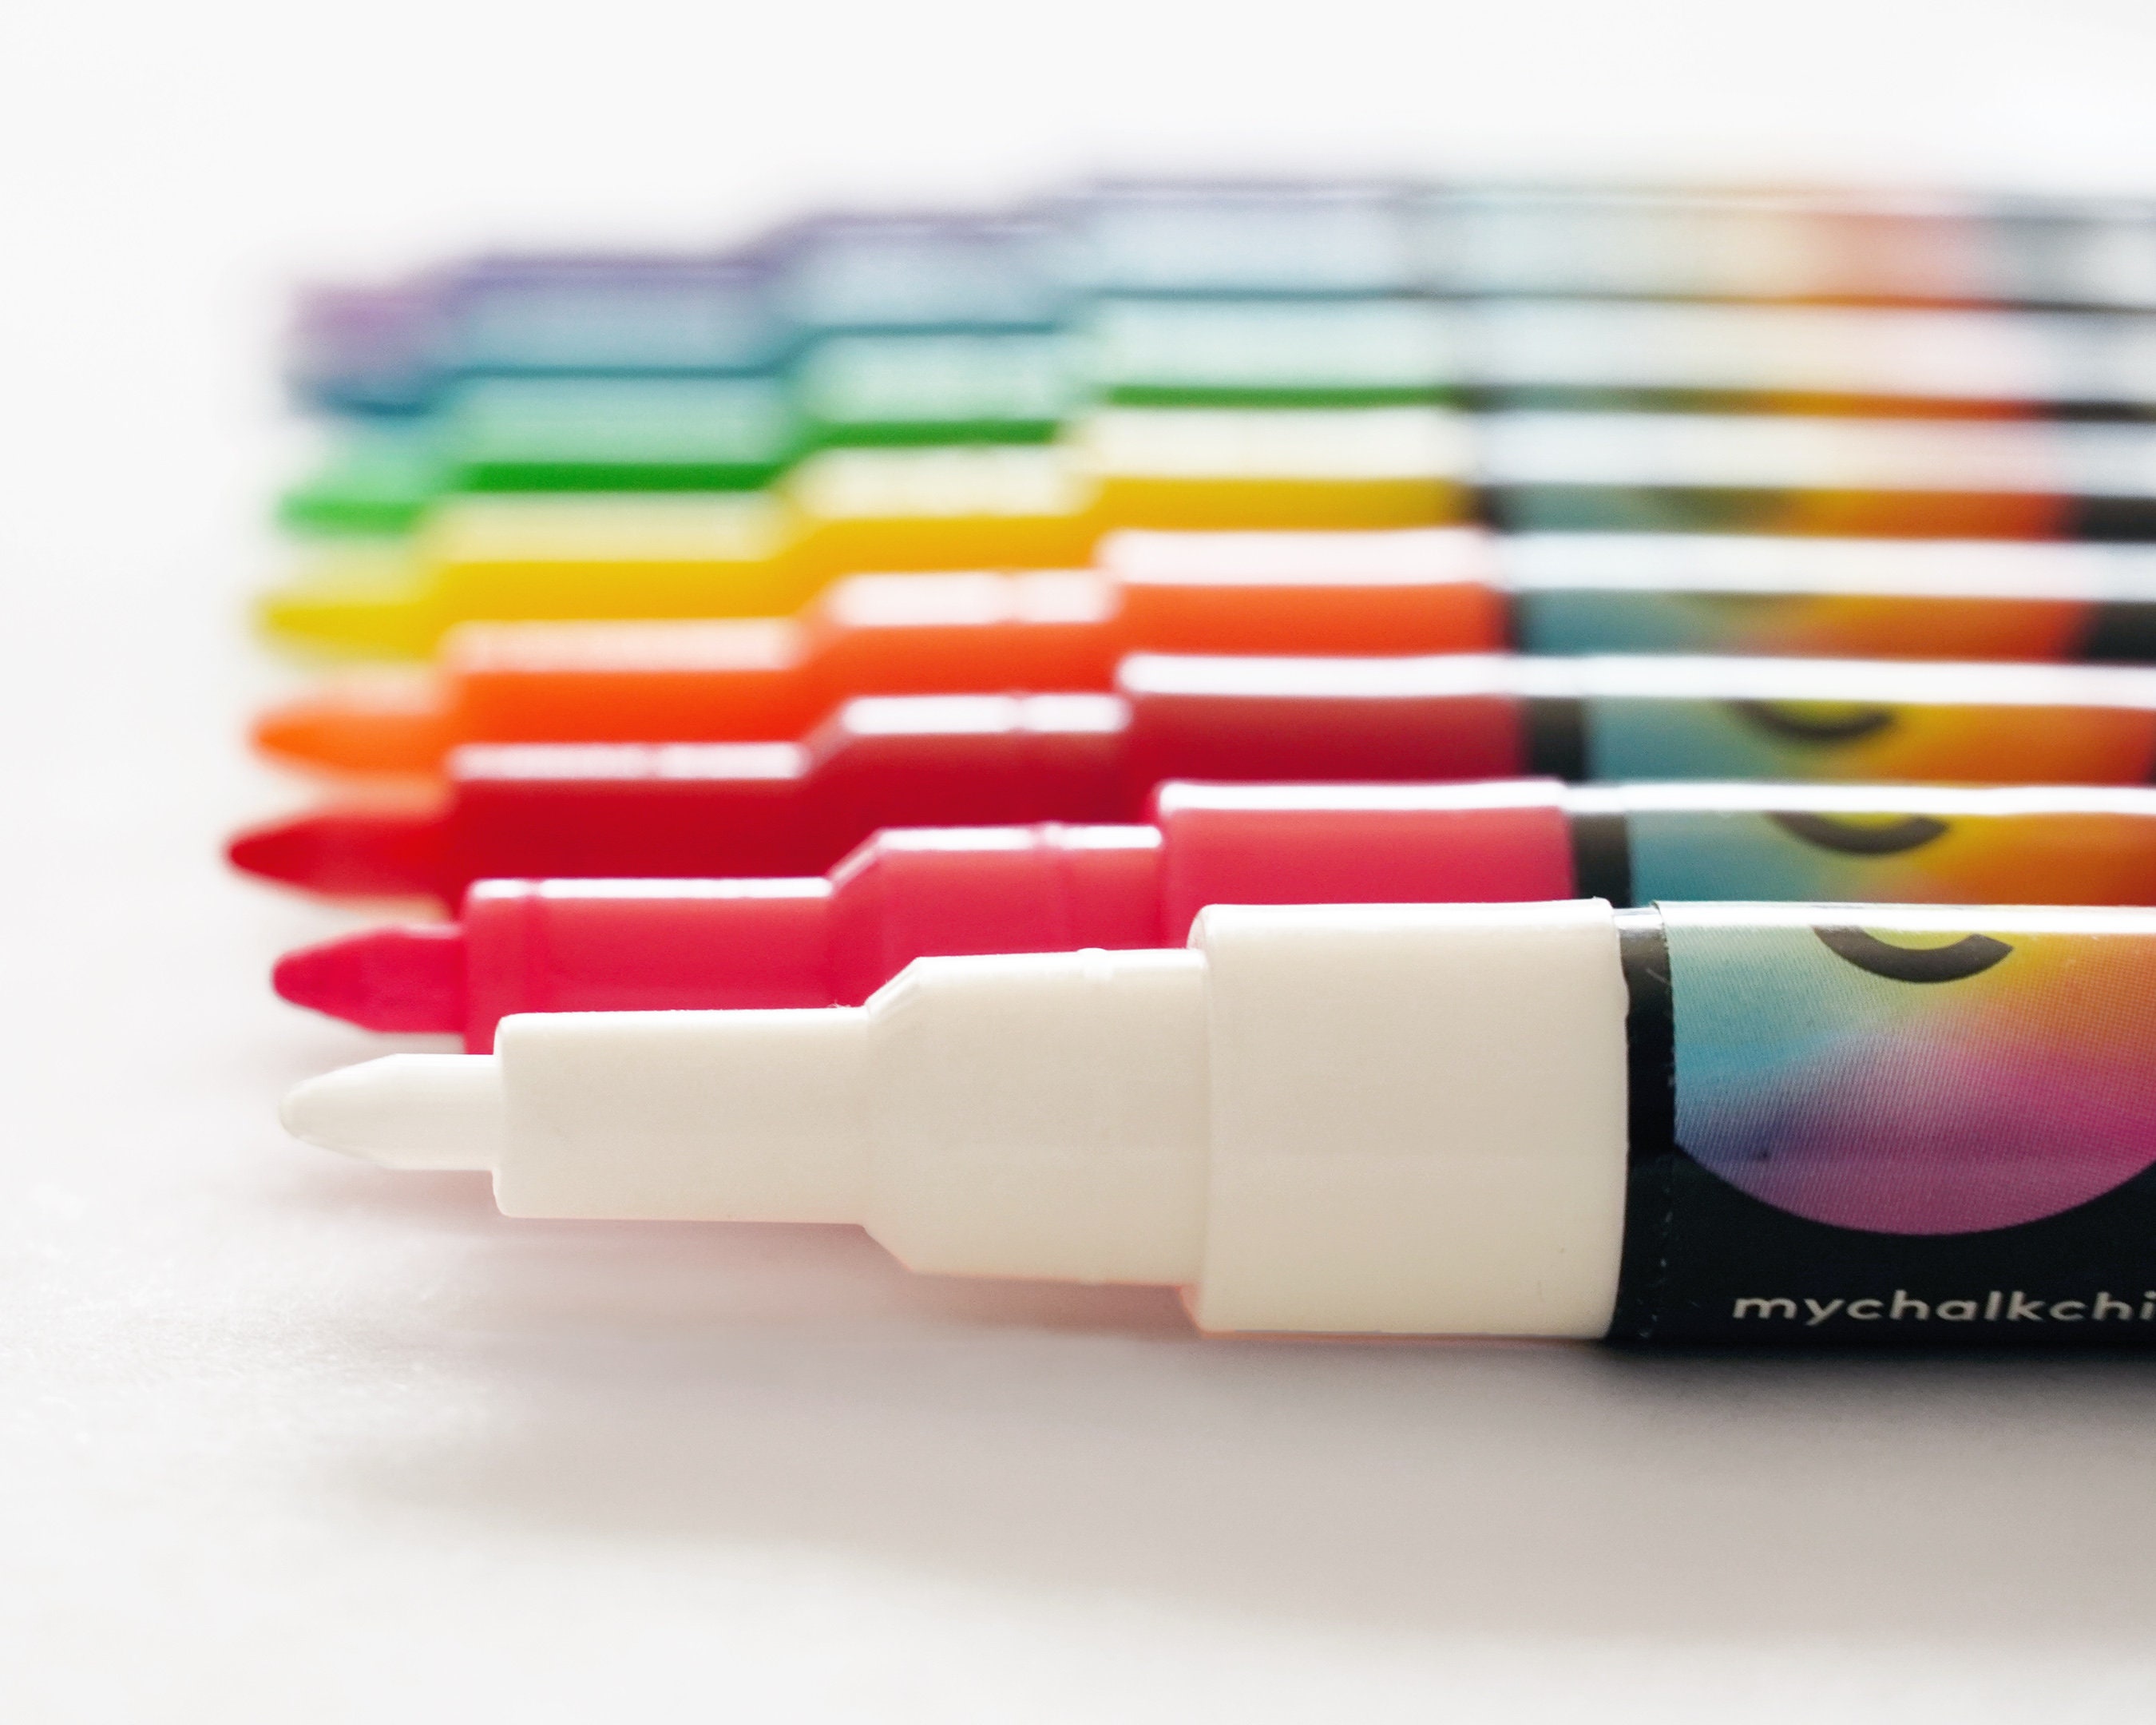 White Sewing Pen Chalk Cut Free Erasable Fabric Pen Marker